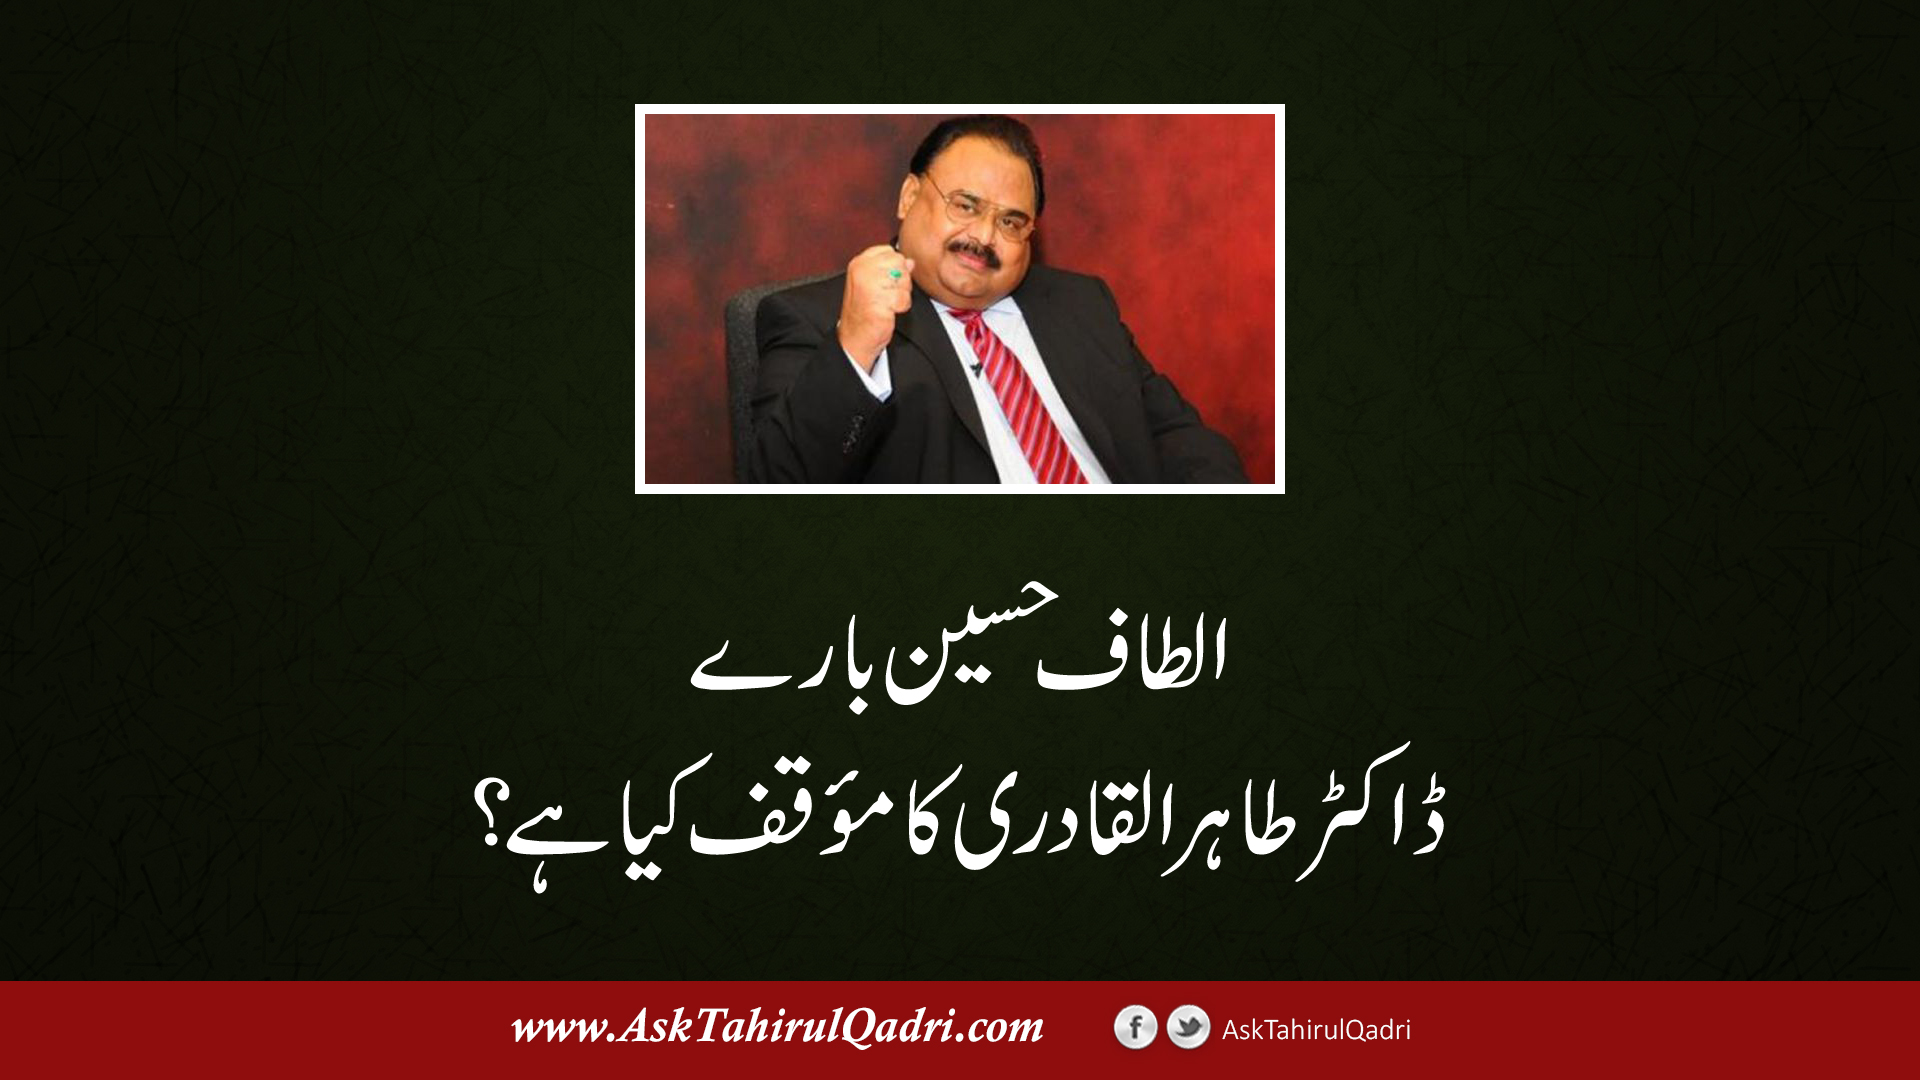 Altaf Hussain baray Dr Tahir ul Qadri ka moaqqaf kya hai?